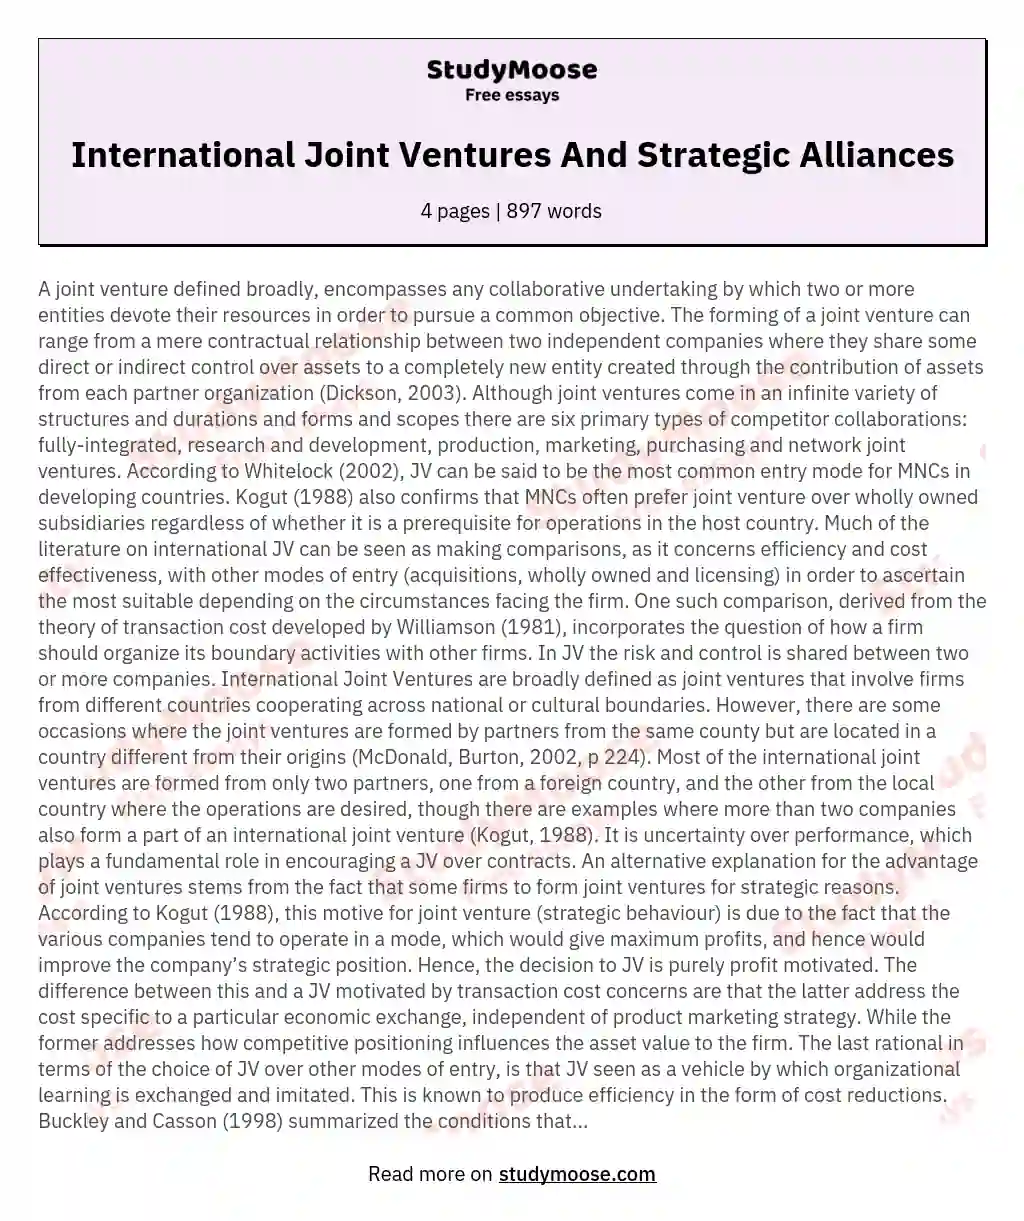 International Joint Ventures And Strategic Alliances essay